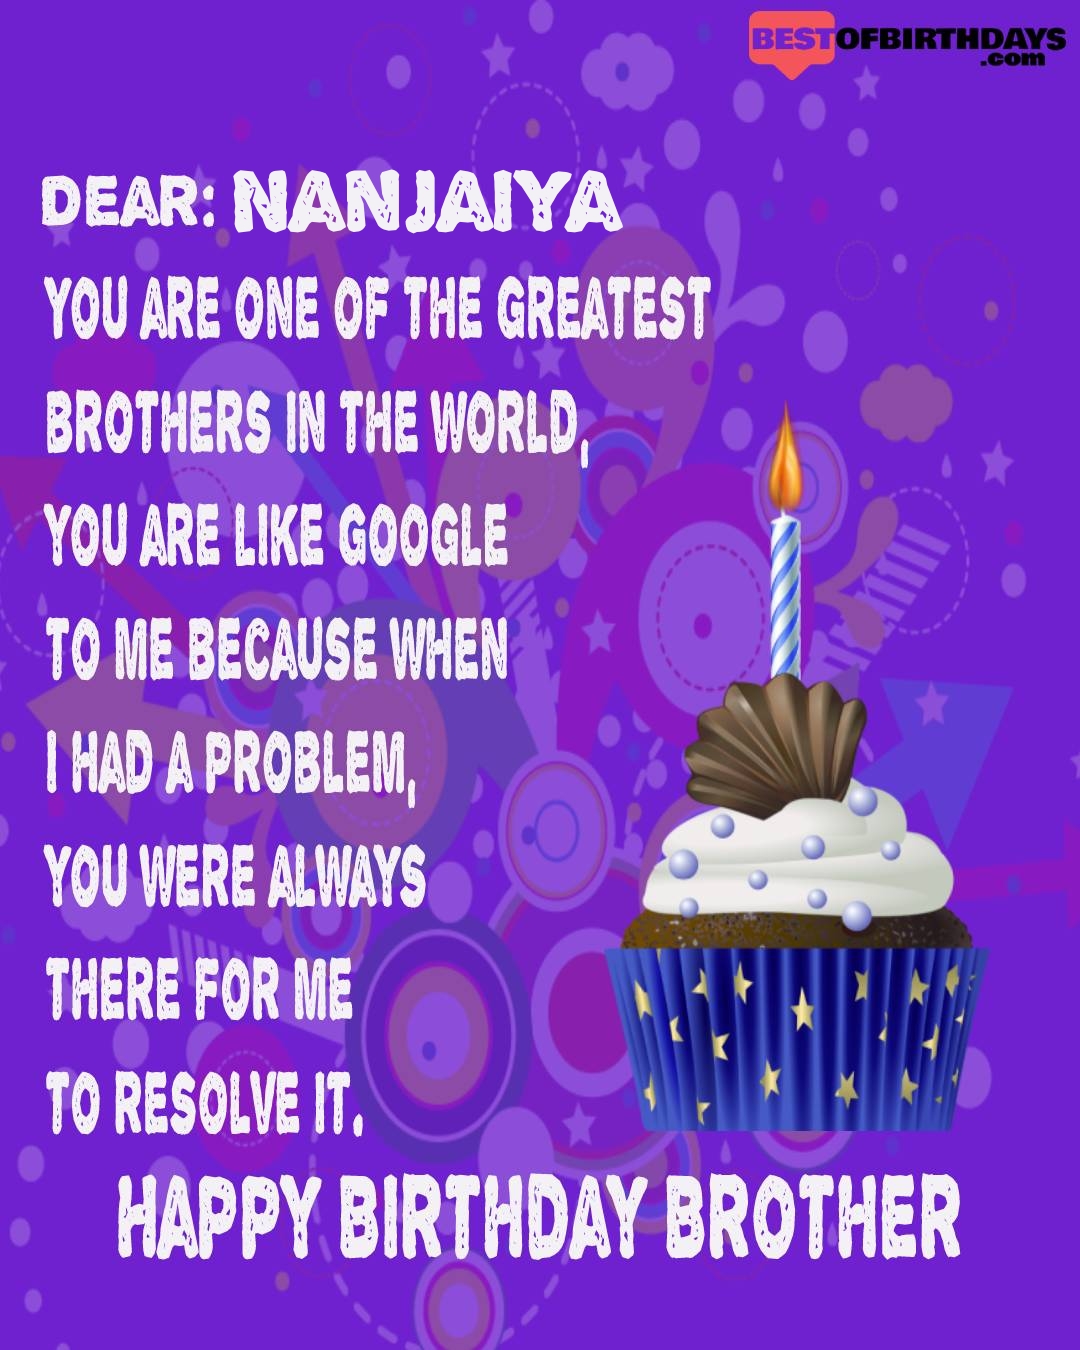 Happy birthday nanjaiya bhai brother bro